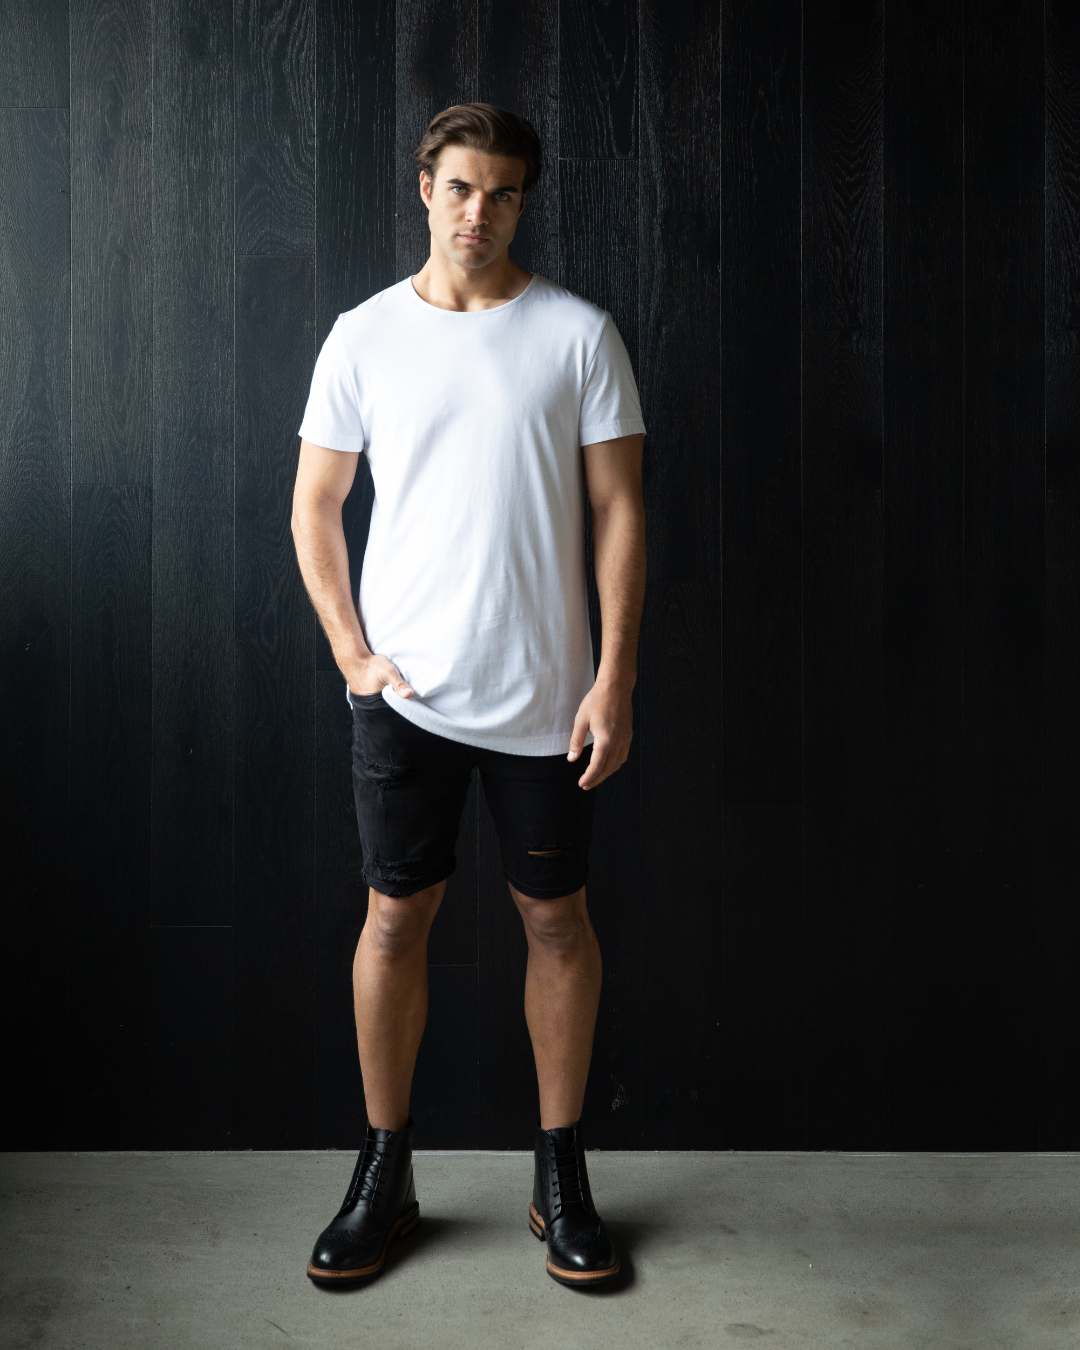 Mister Bladin ethical sustainable organic mens tshirts made in australia luxury cotton BASICS brand tall basketball SLOW fashion